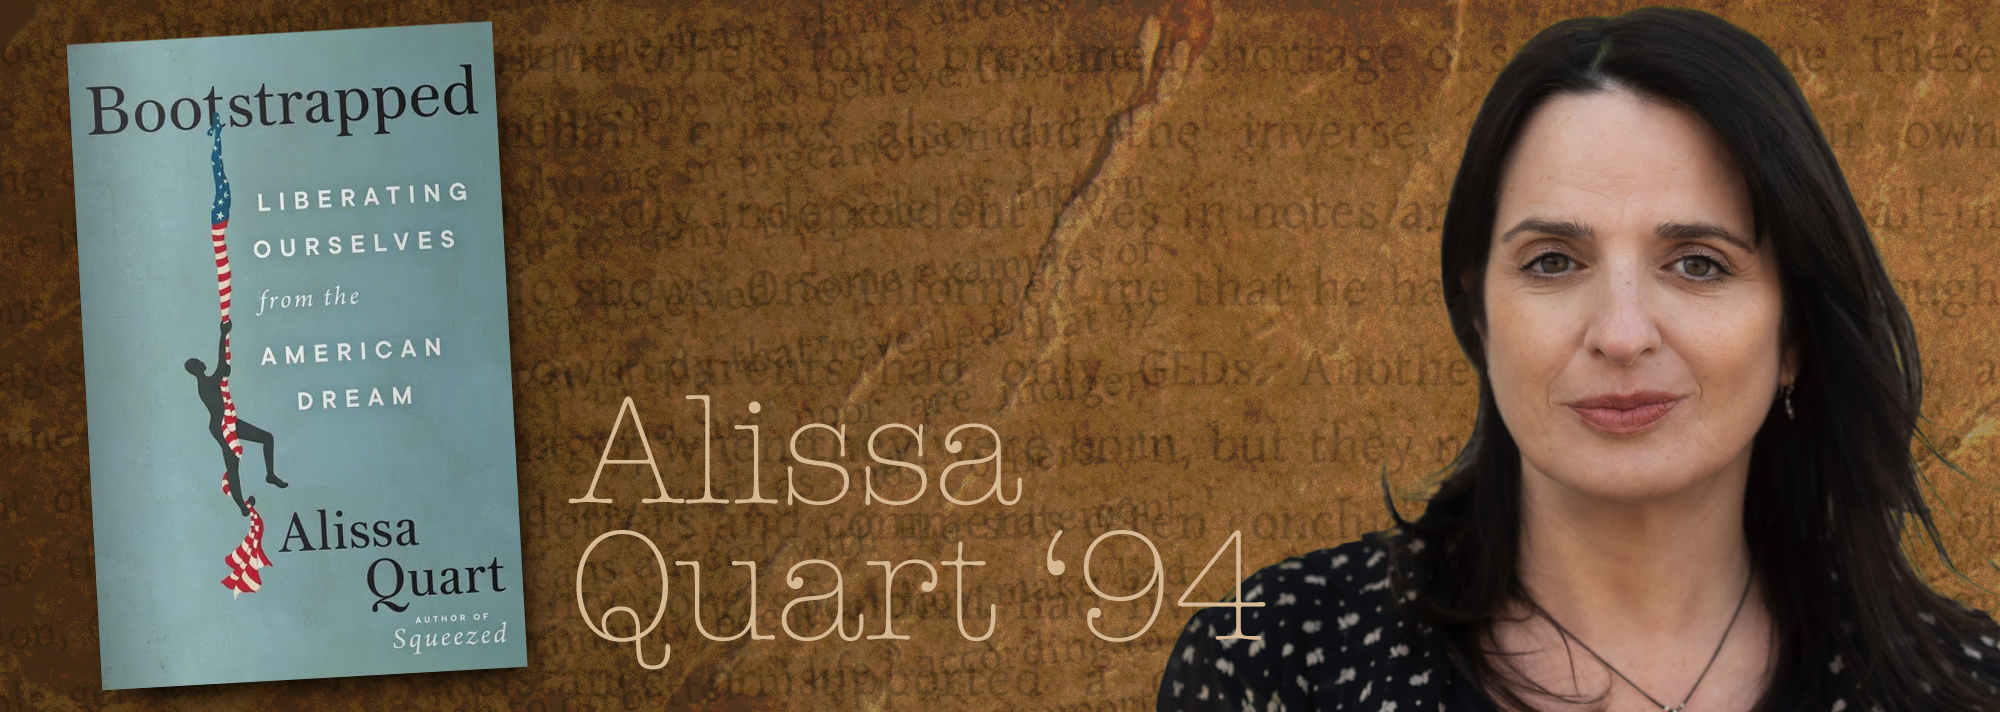 Boostrapped: Alissa Quart